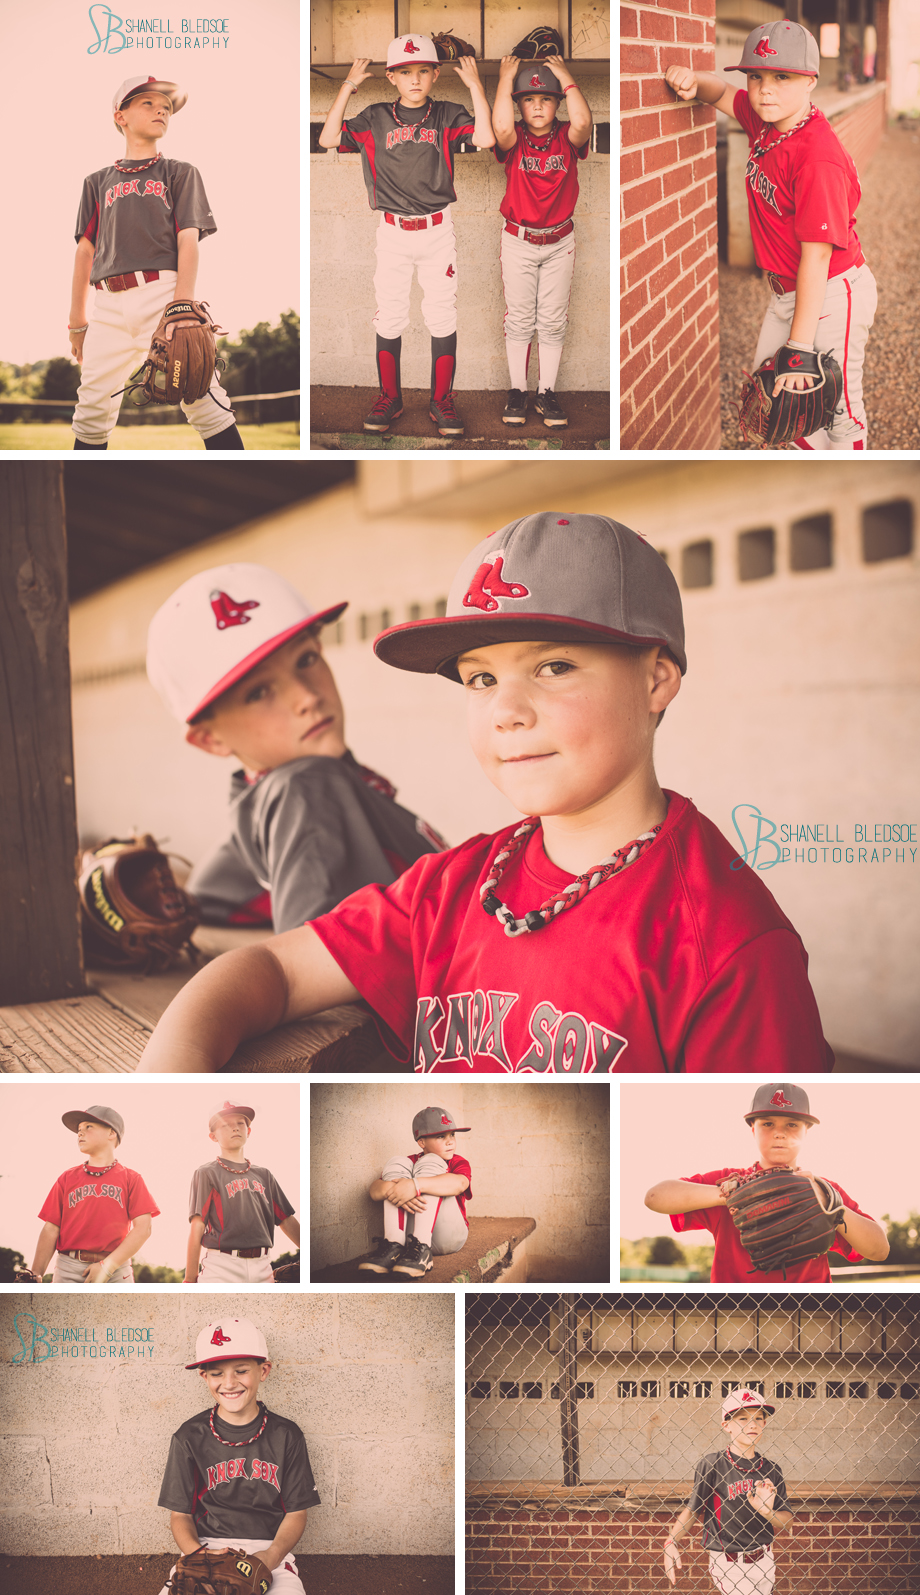 Knox Sox baseball photos, little league baseball photos, baseball theme photo session, 